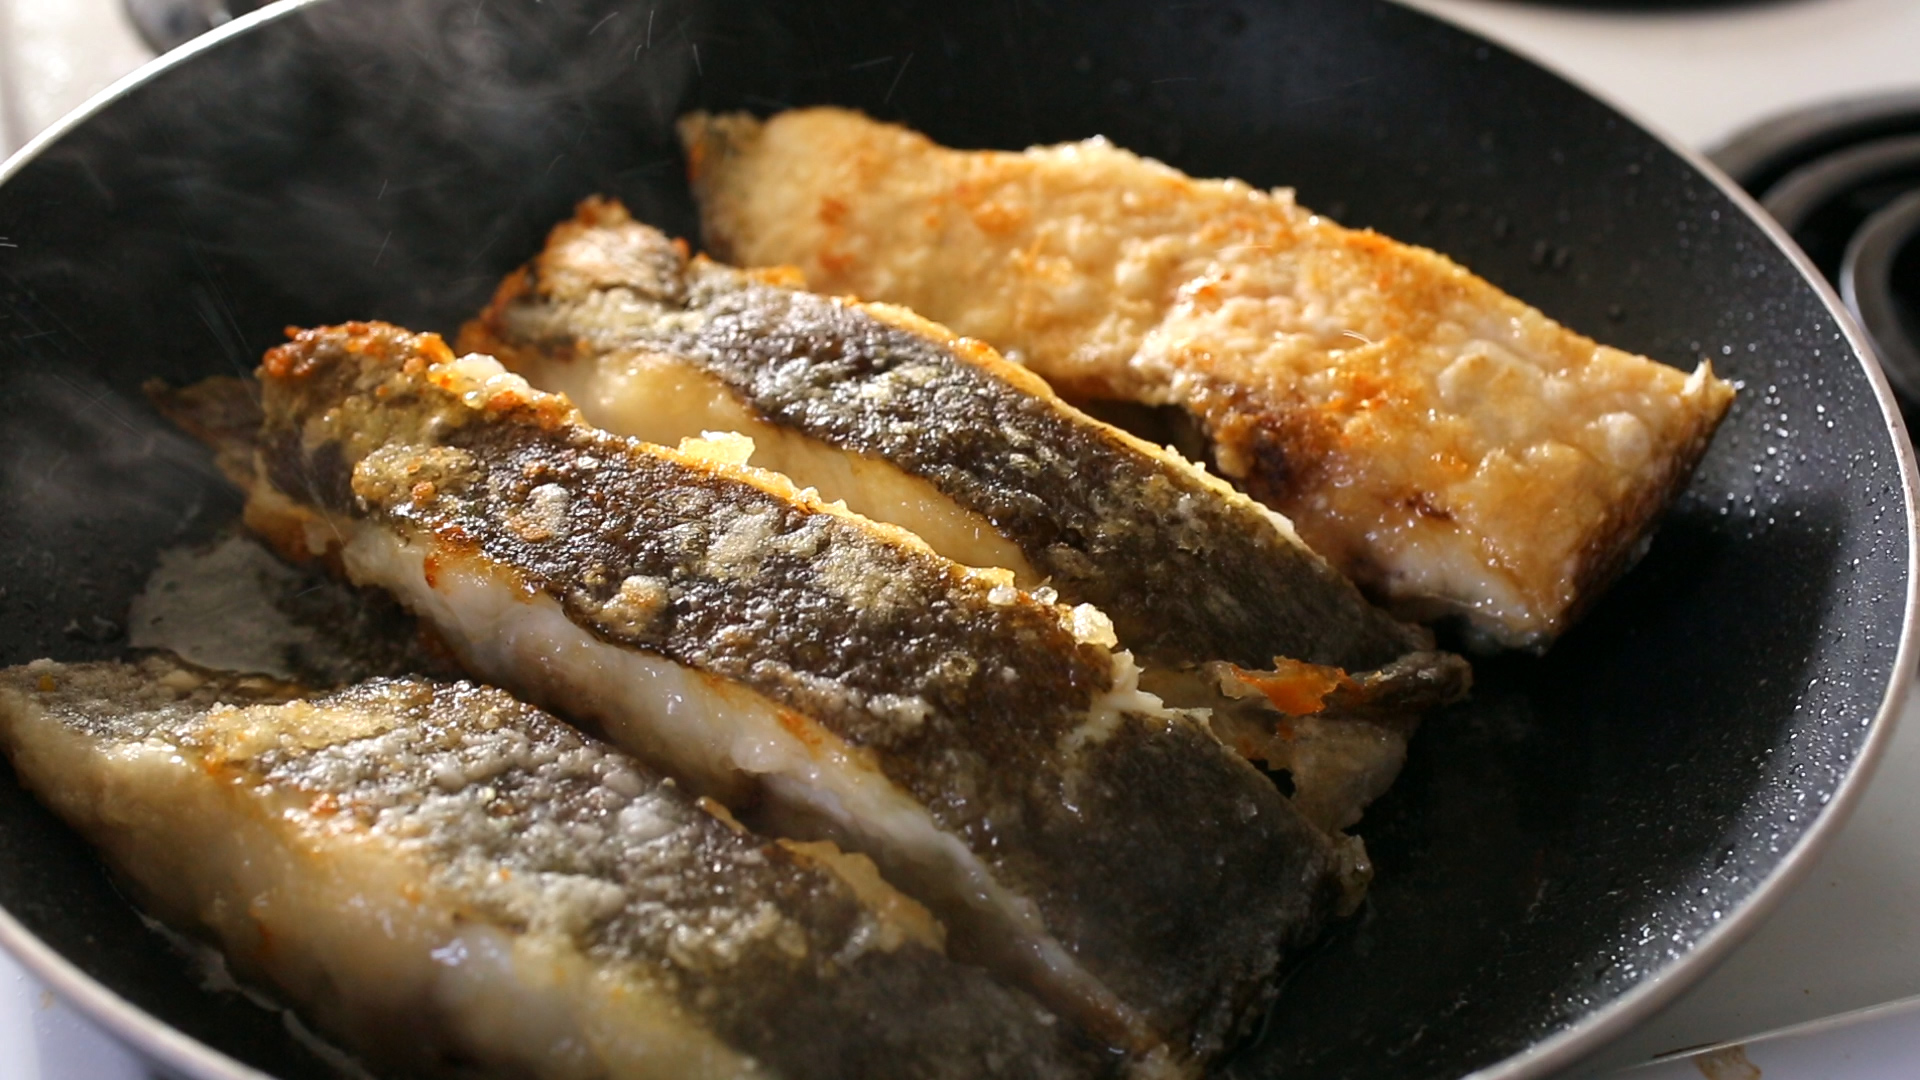 Fried flat fish